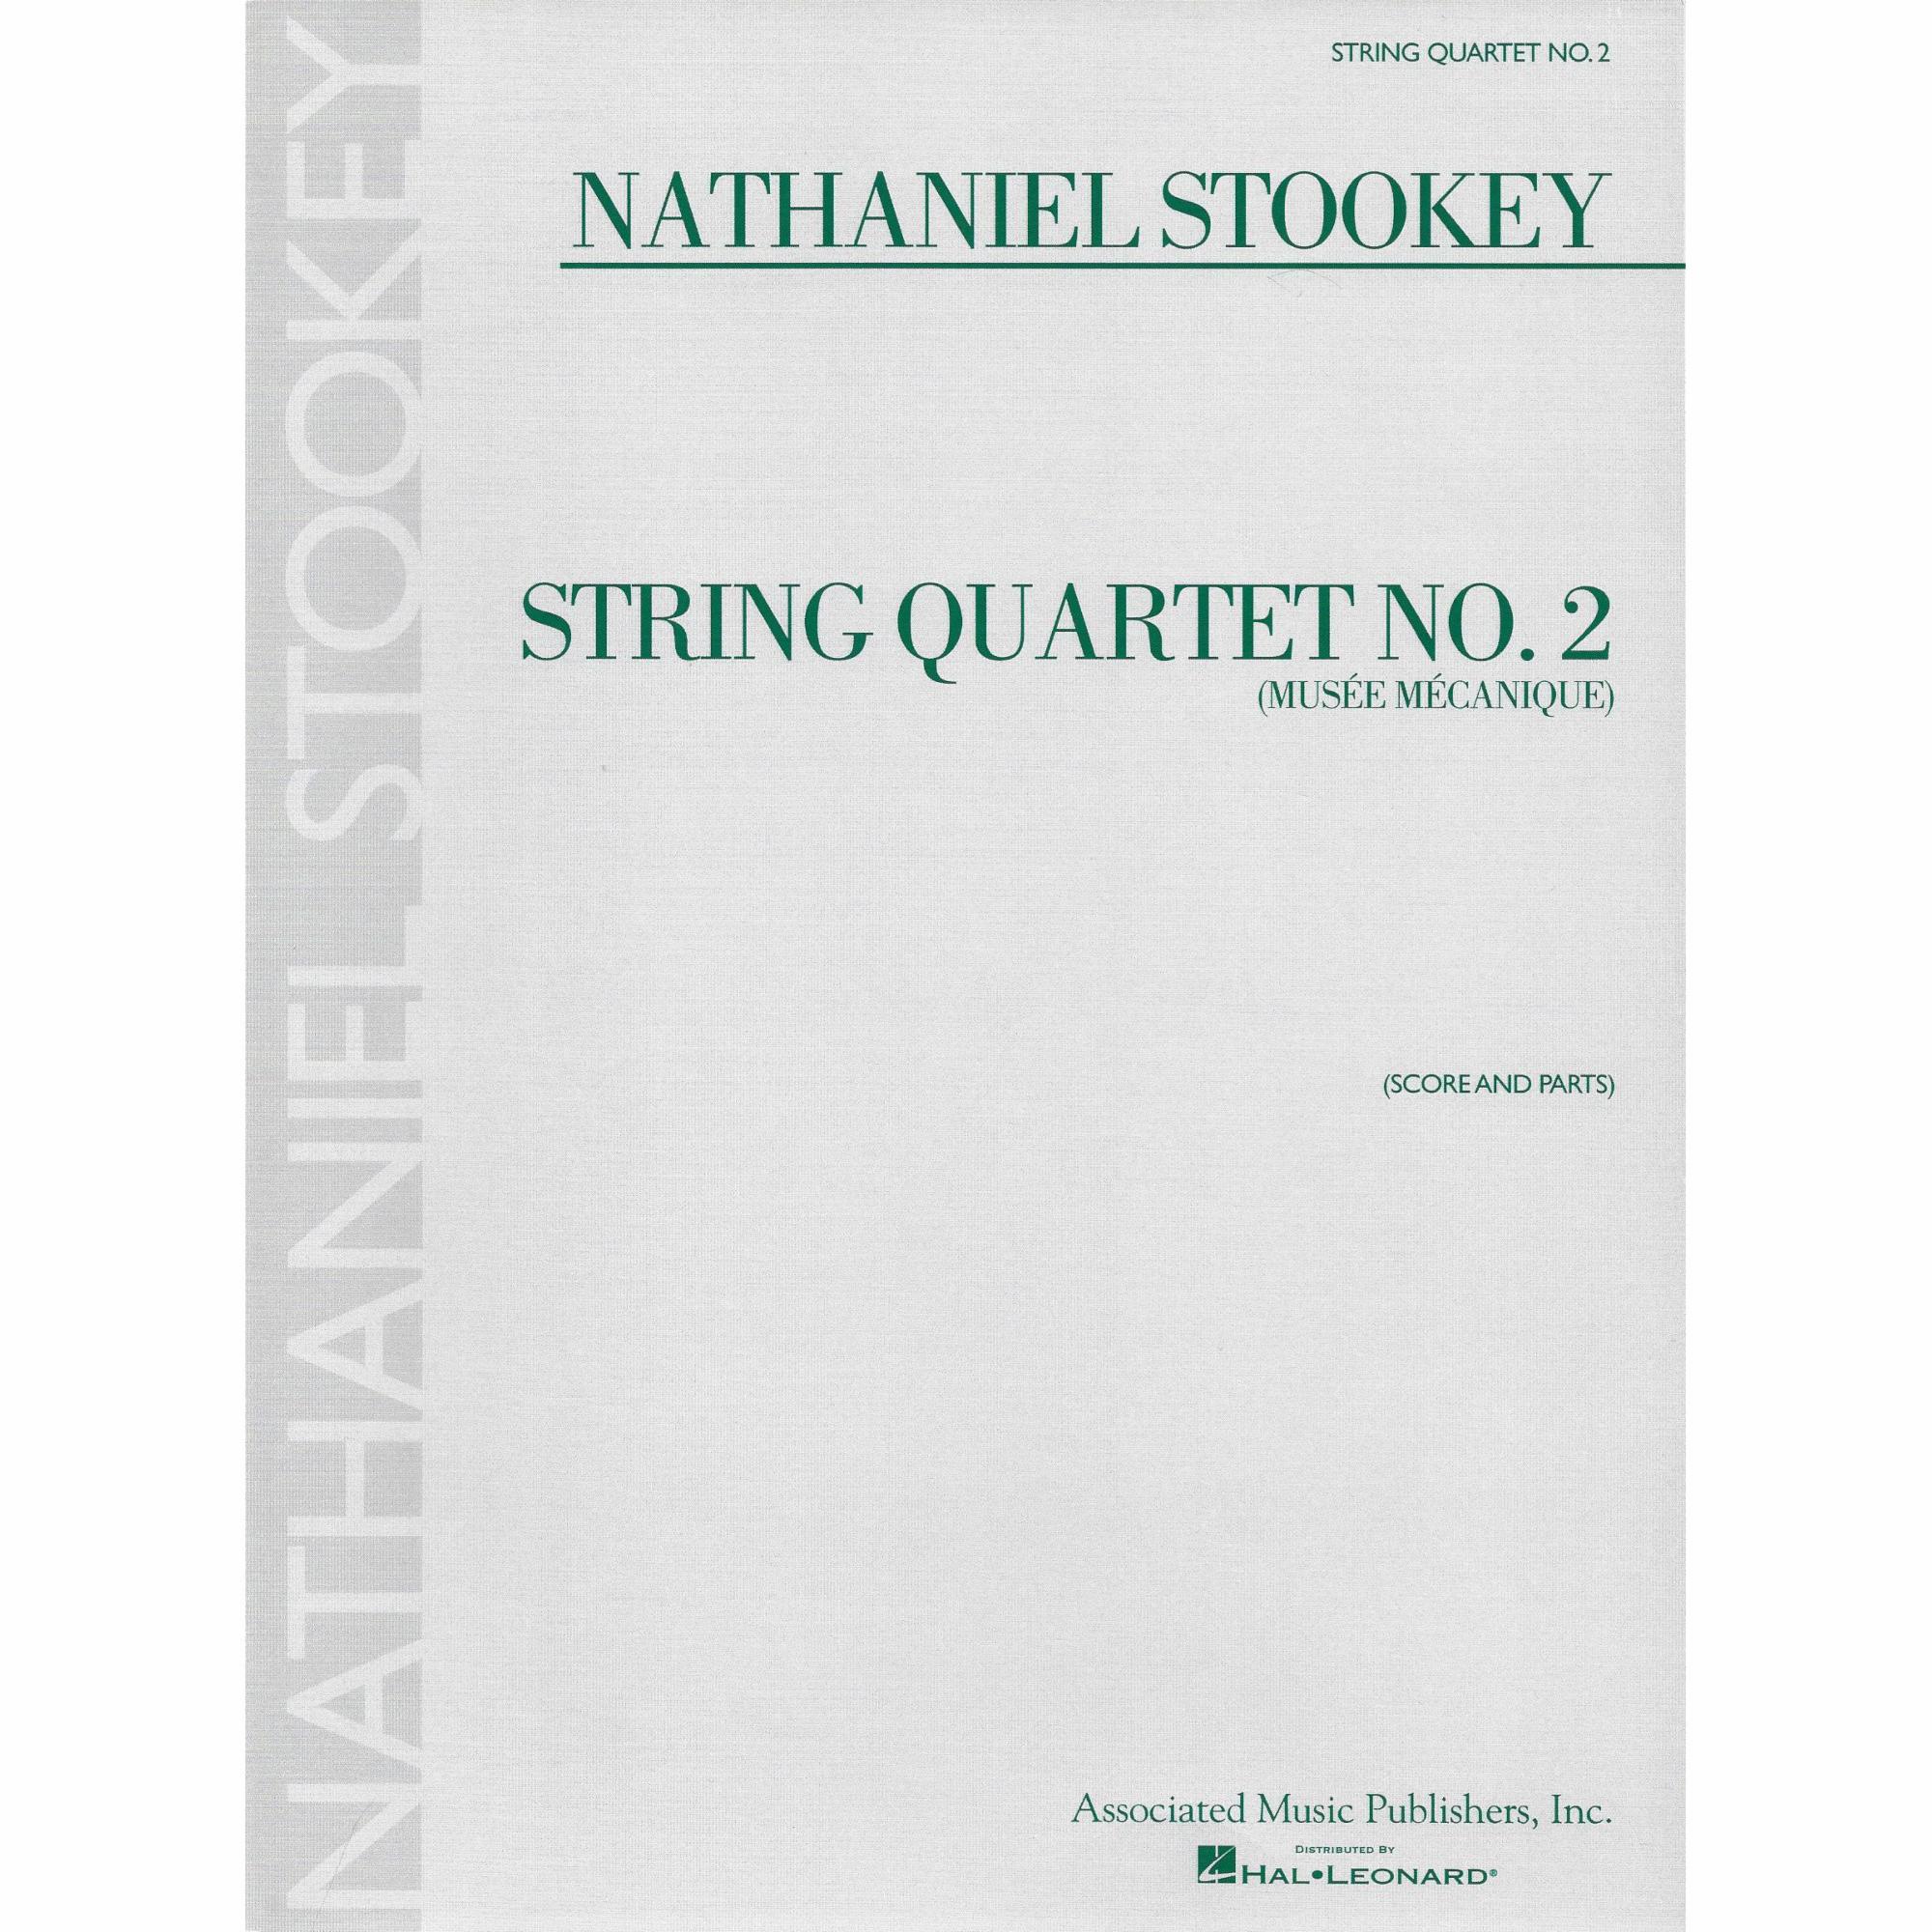 Stookey -- String Quartet No. 2 (Musee Mechanique)